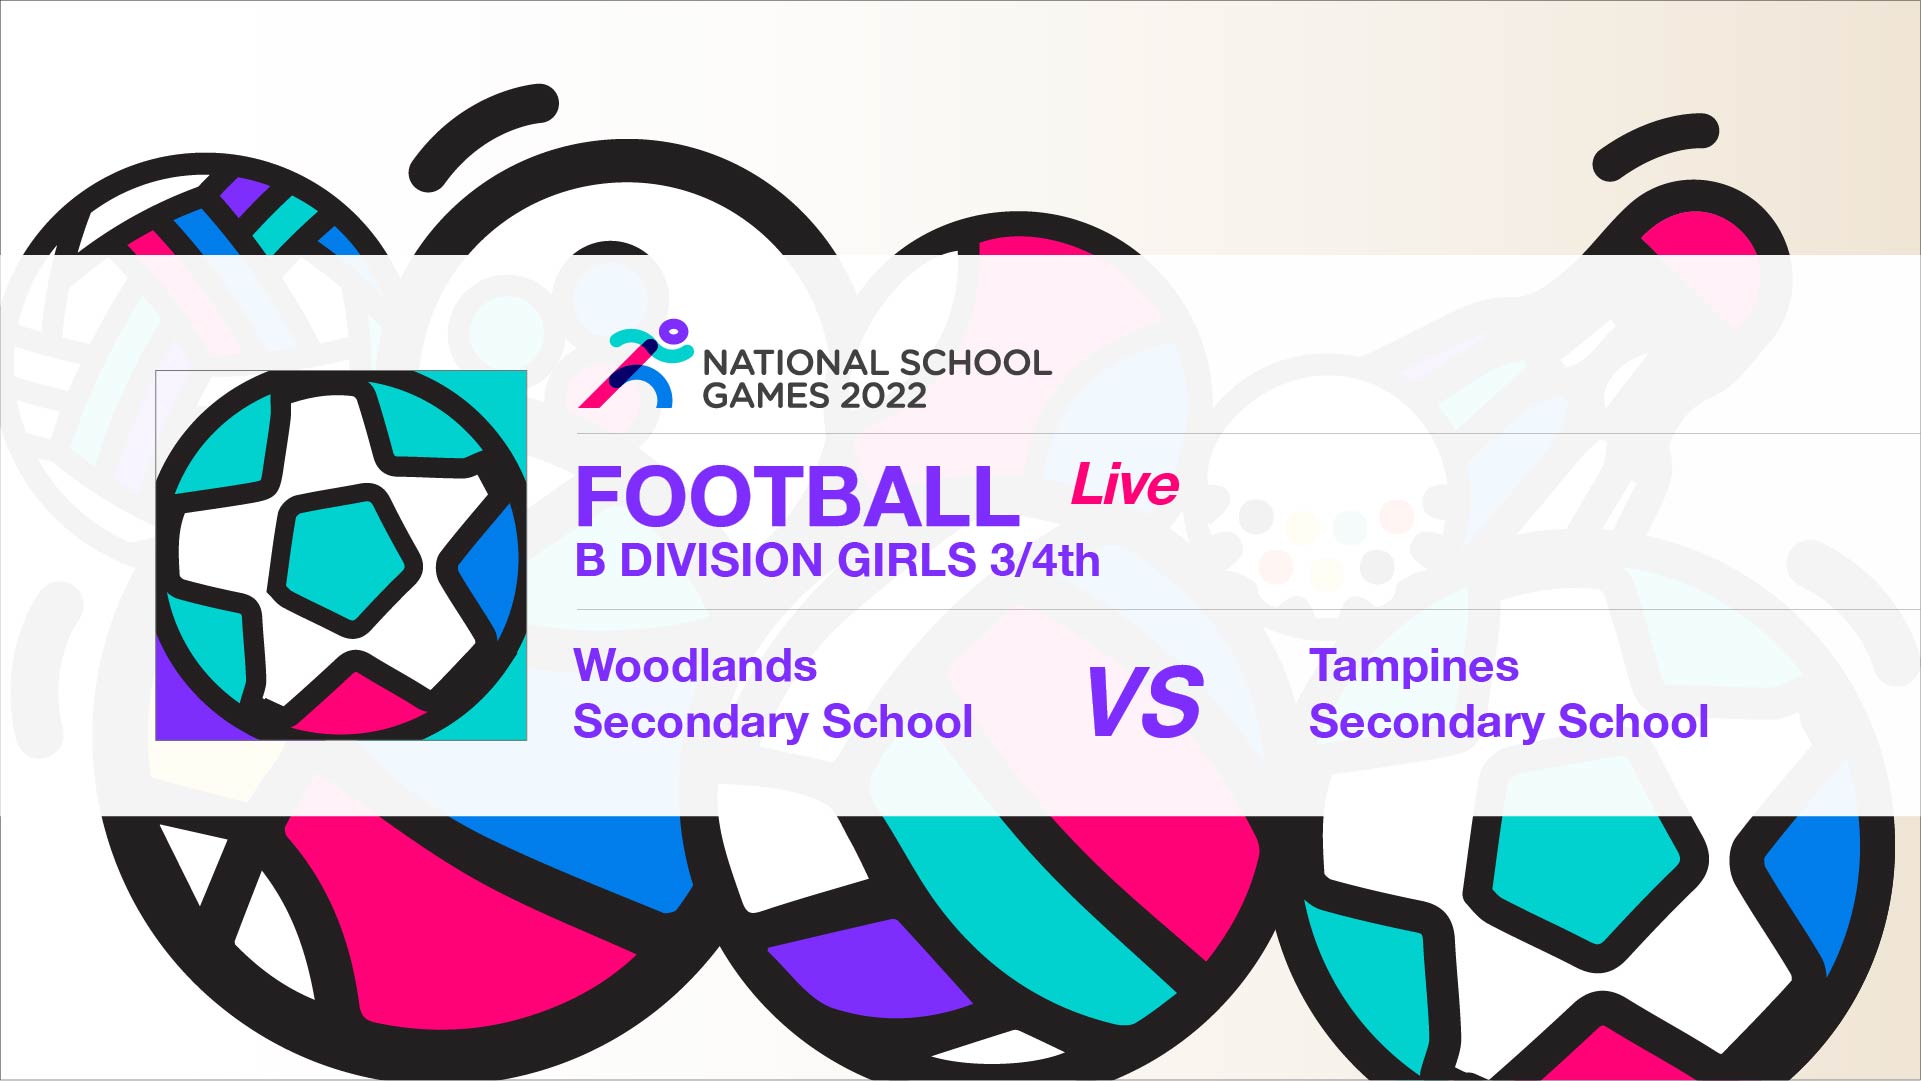 SSSC Football B Division Girls 3rd/4th | Woodlands Secondary School vs Tampines Secondary School